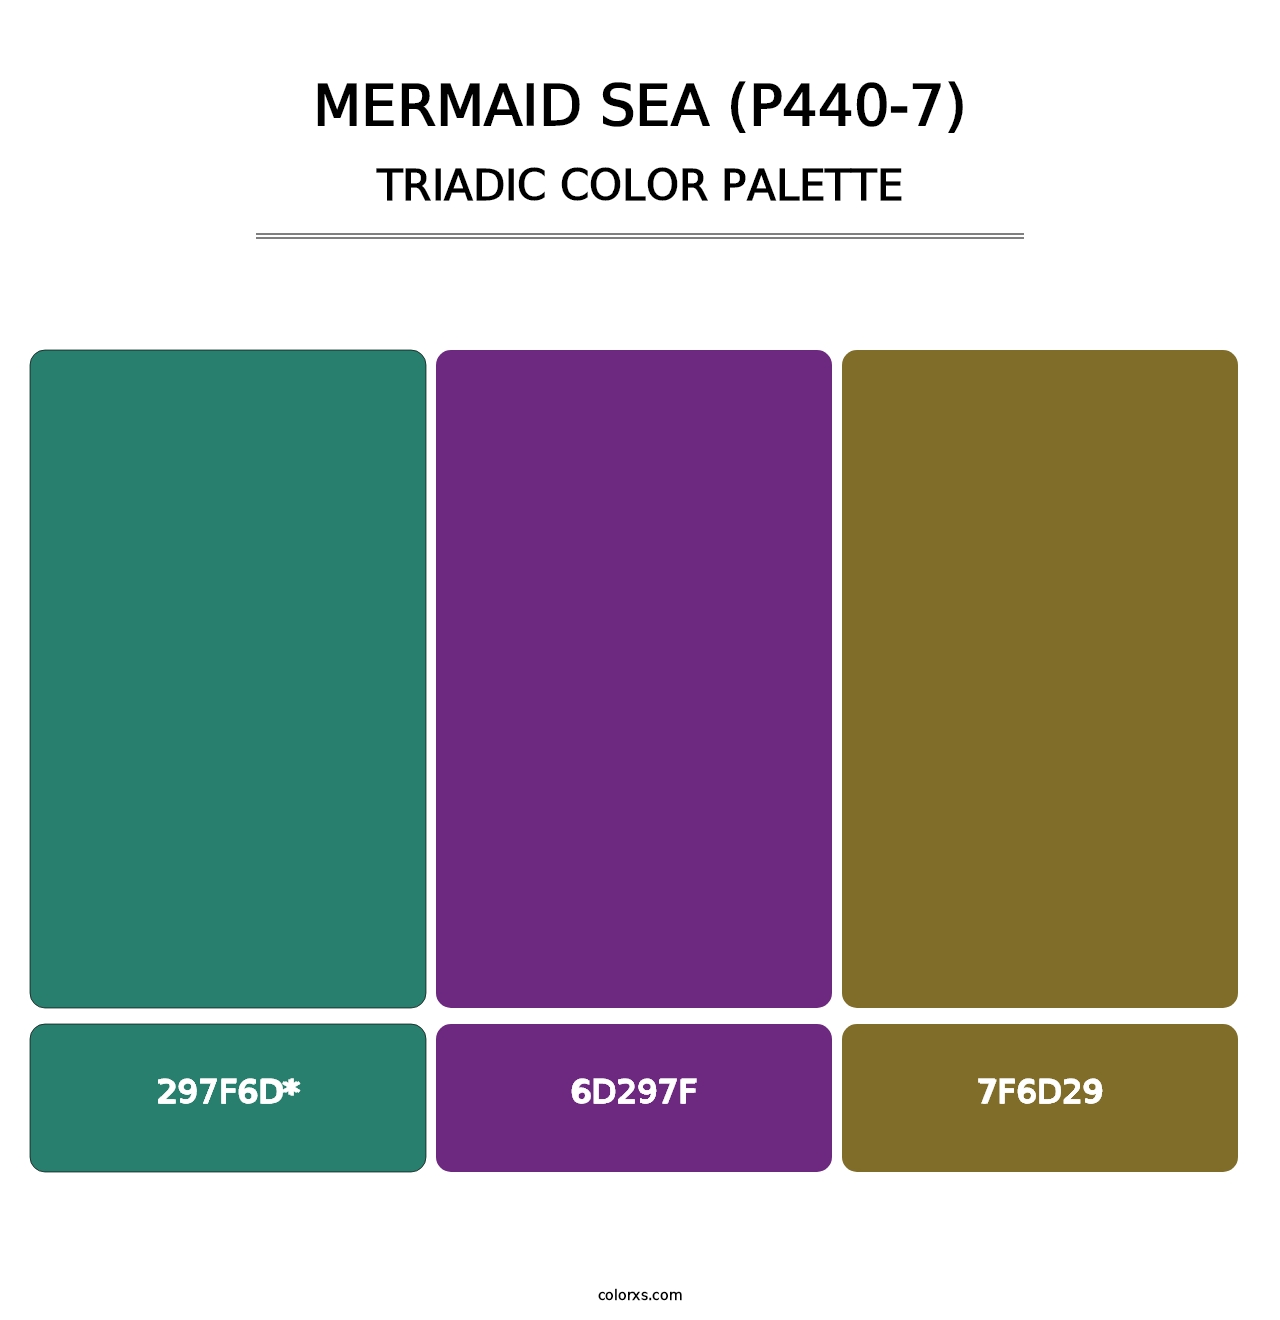 Mermaid Sea (P440-7) - Triadic Color Palette